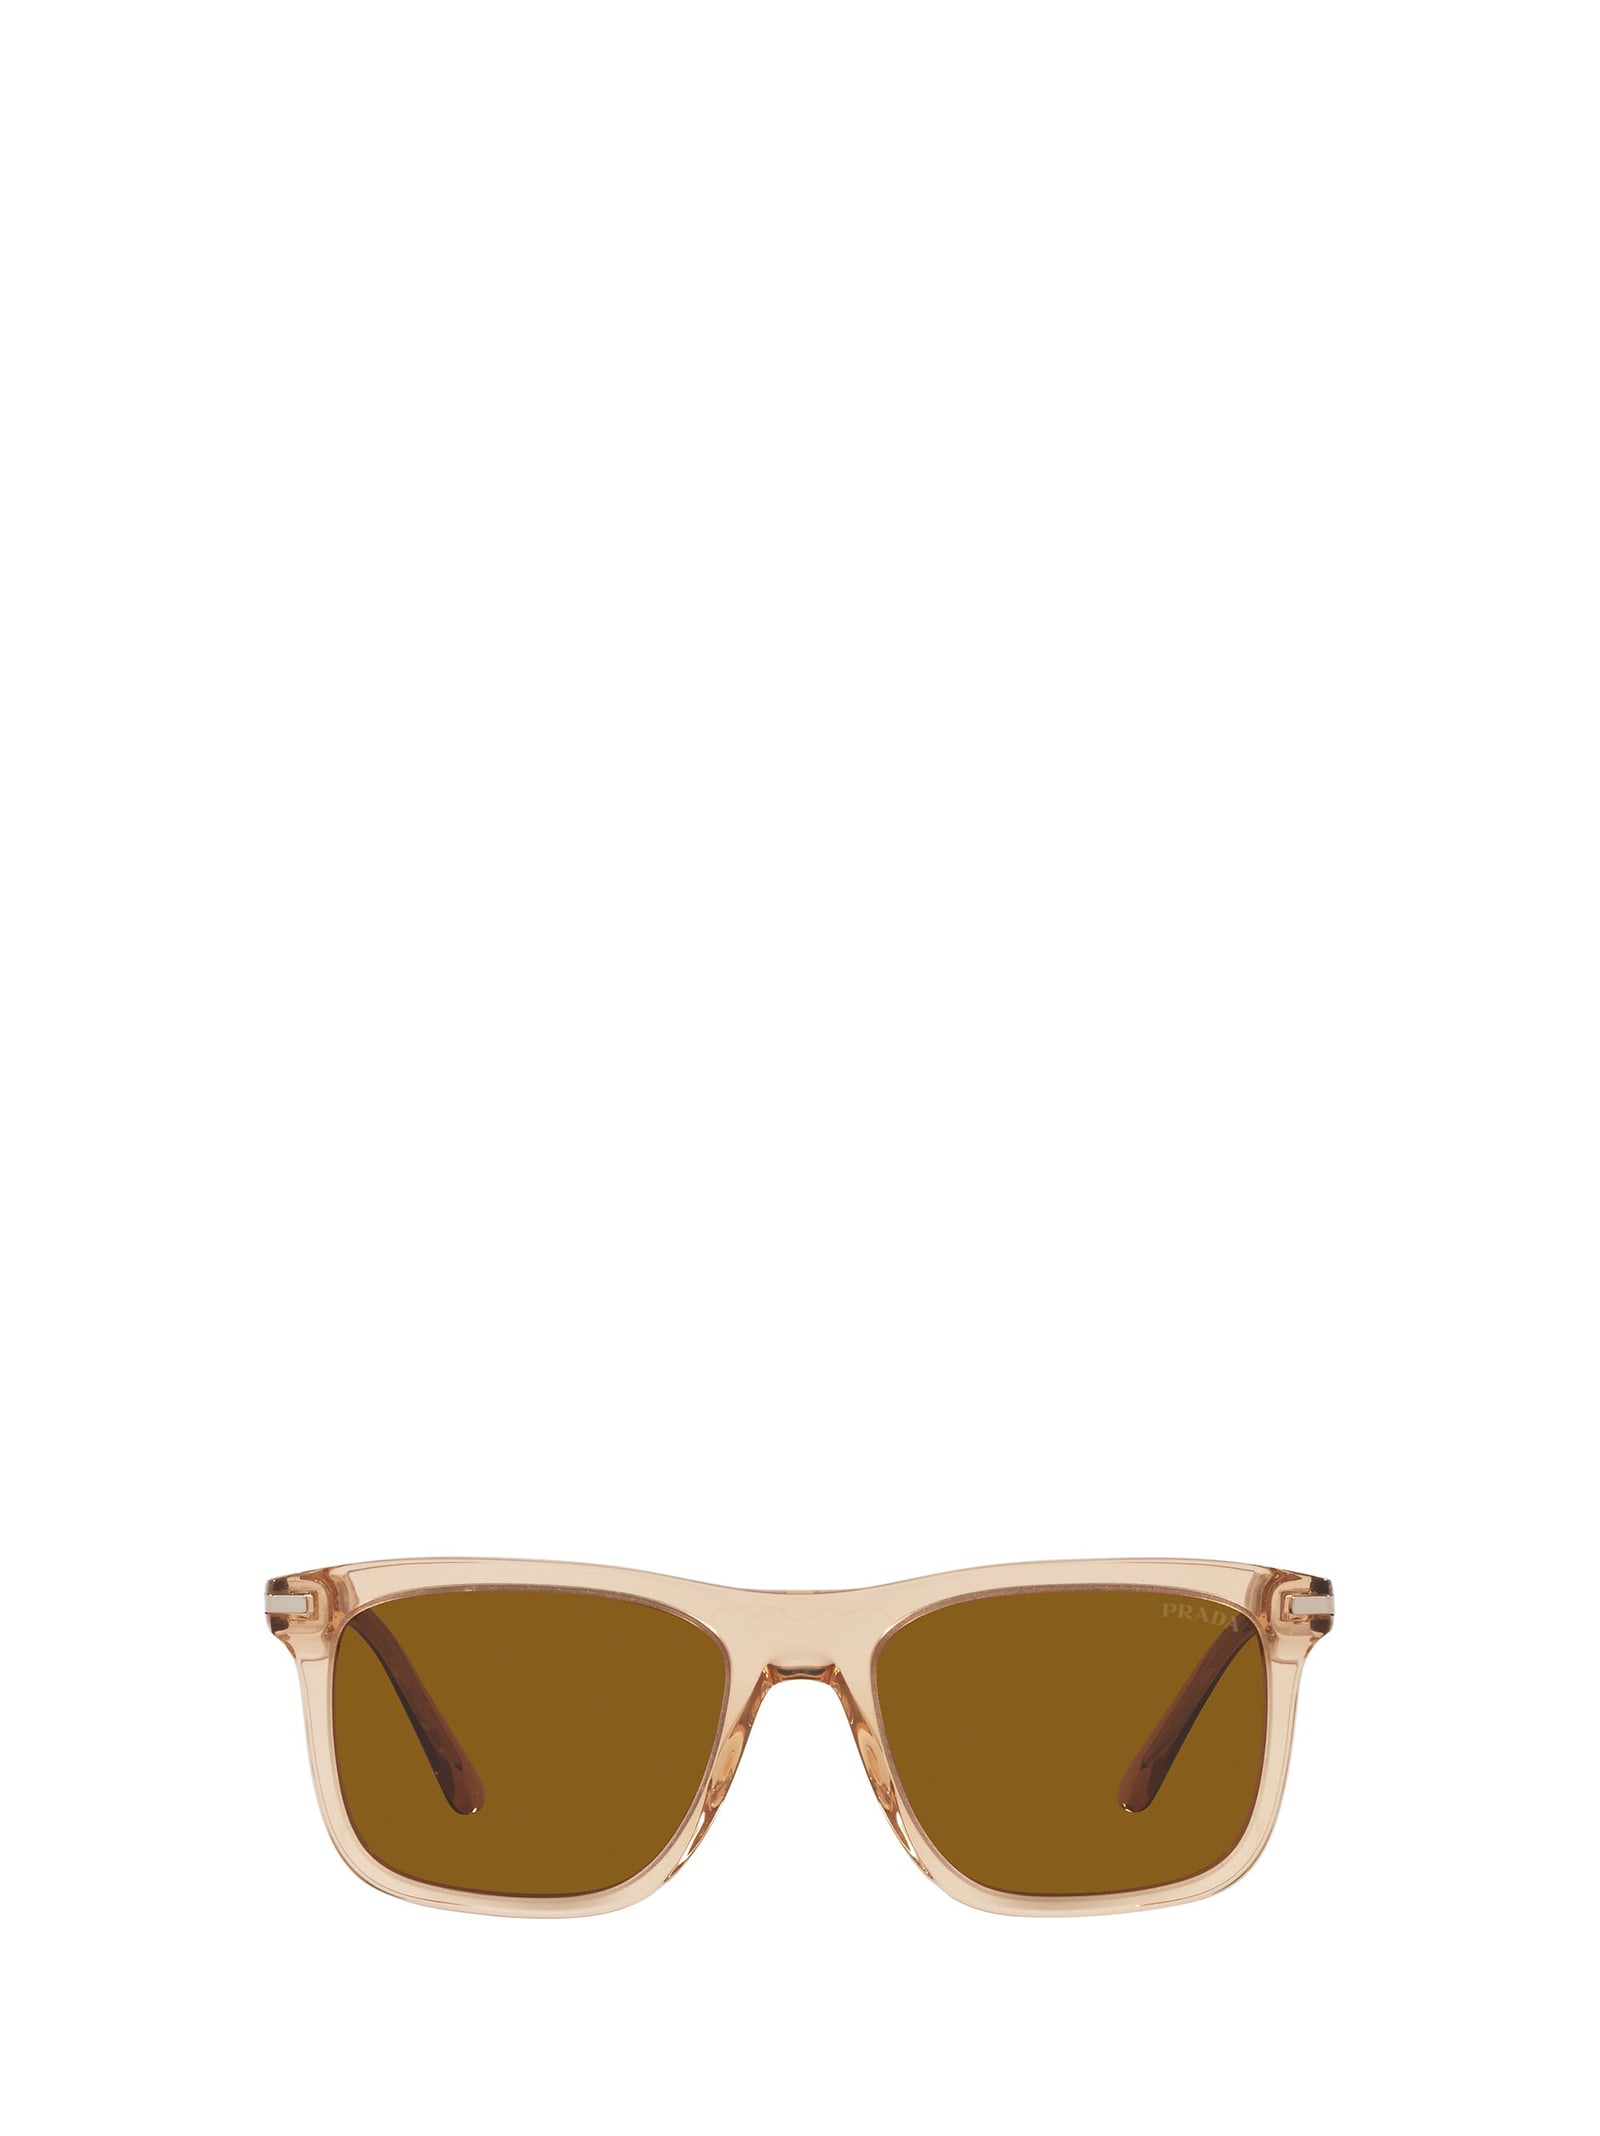 Prada Eyewear Prada Pr 18ws Amber Crystal Sunglasses